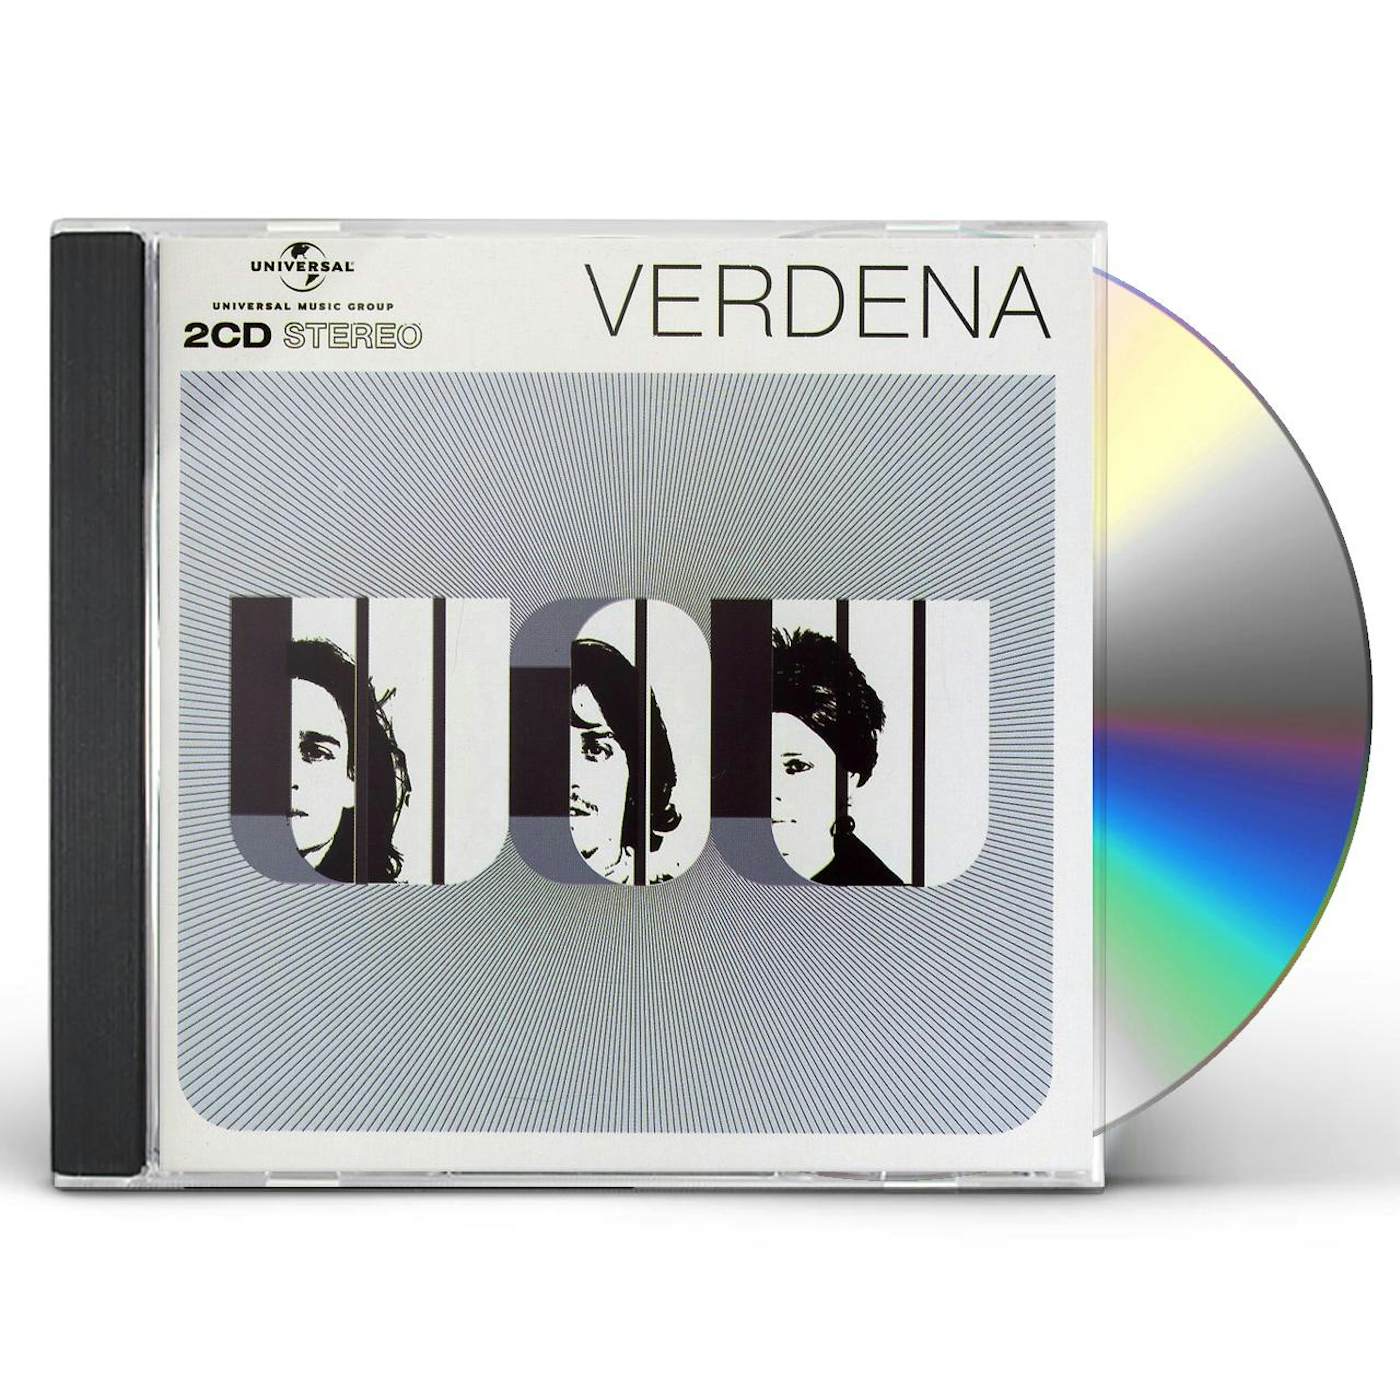 Verdena WOW CD